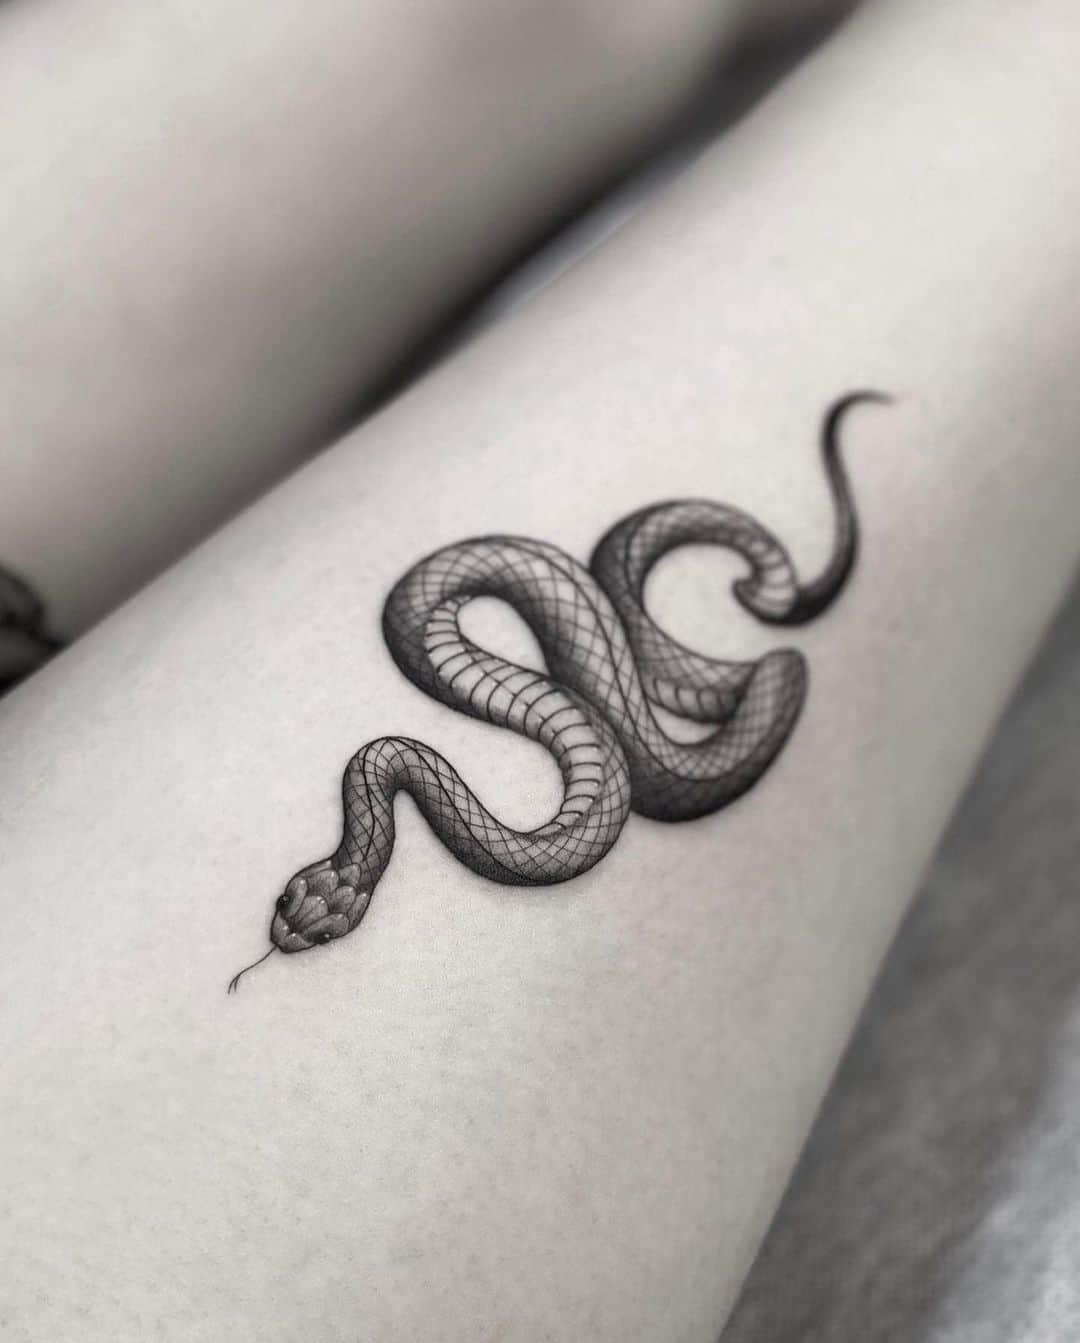 Venomous Snake Tattoo, Vectors | GraphicRiver